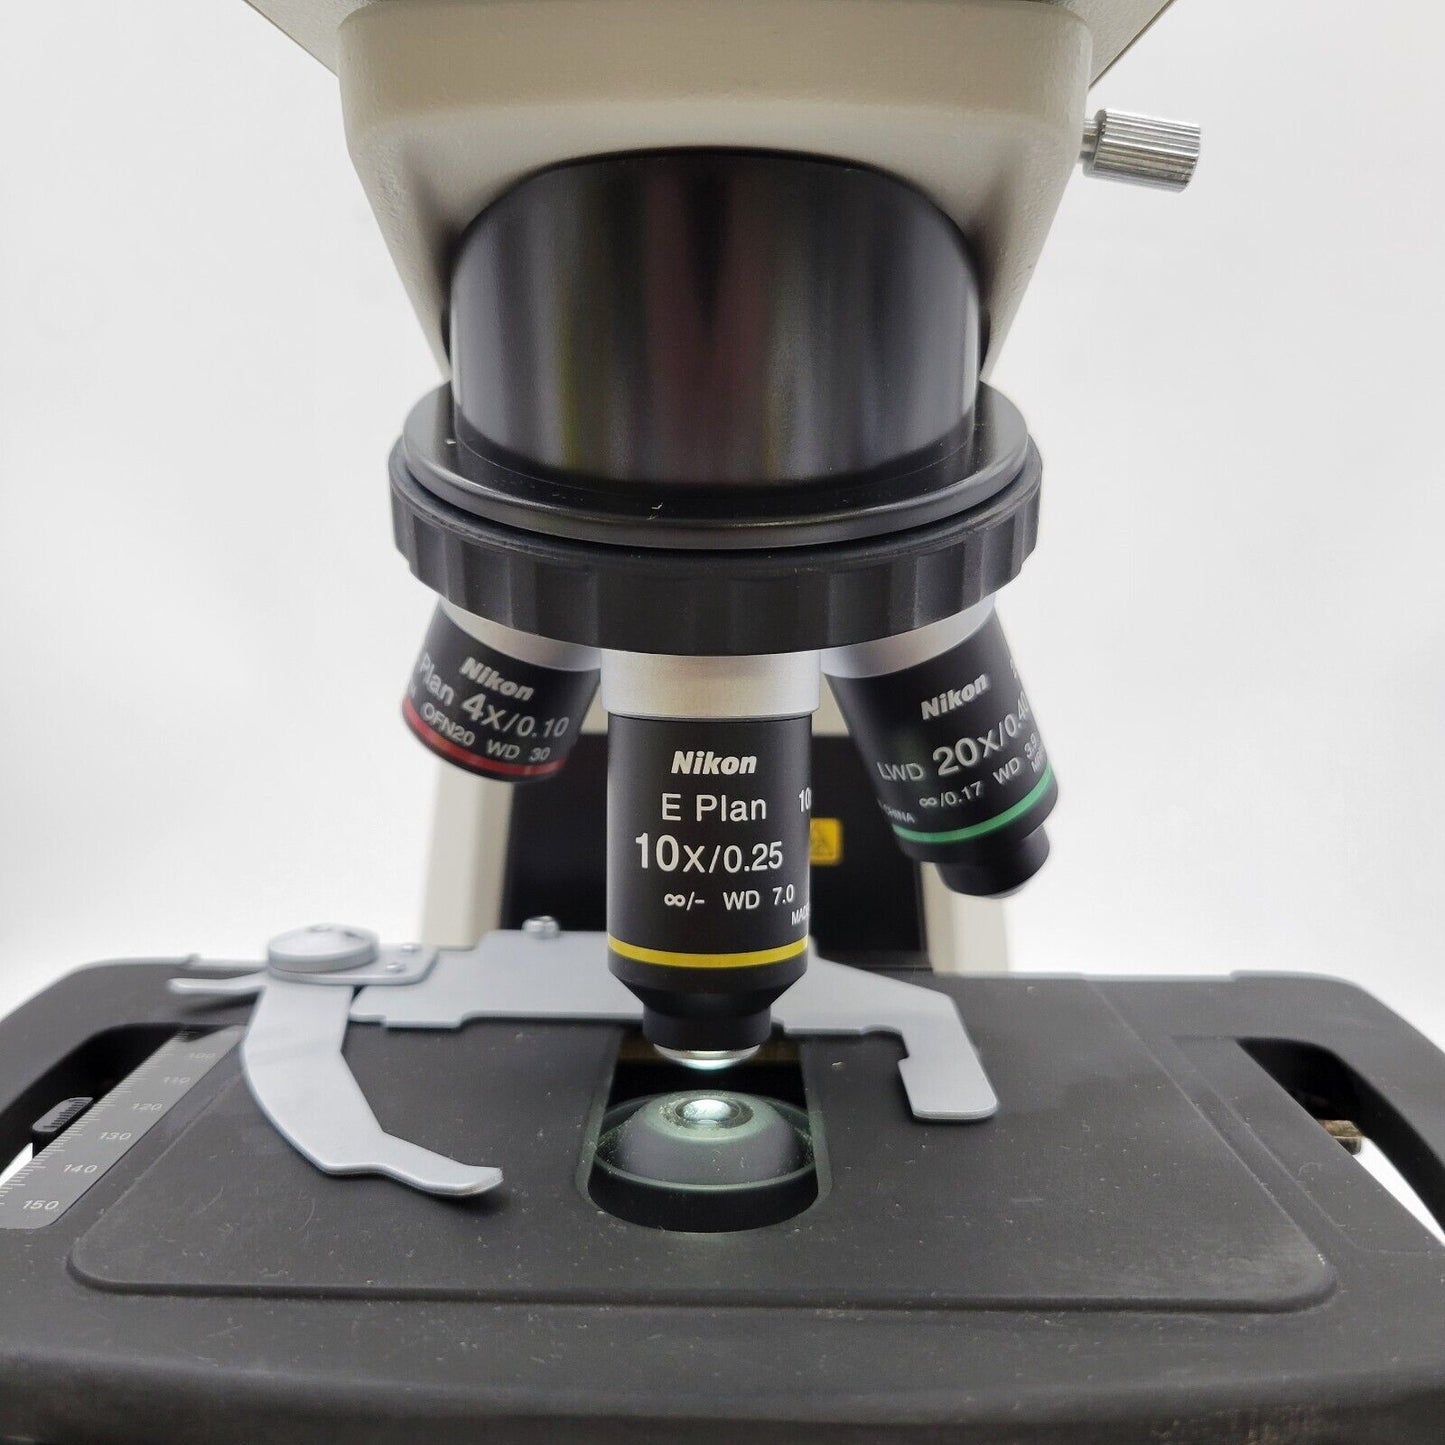 Nikon Microscope E200 LED Pathology Travel Microscope - microscopemarketplace